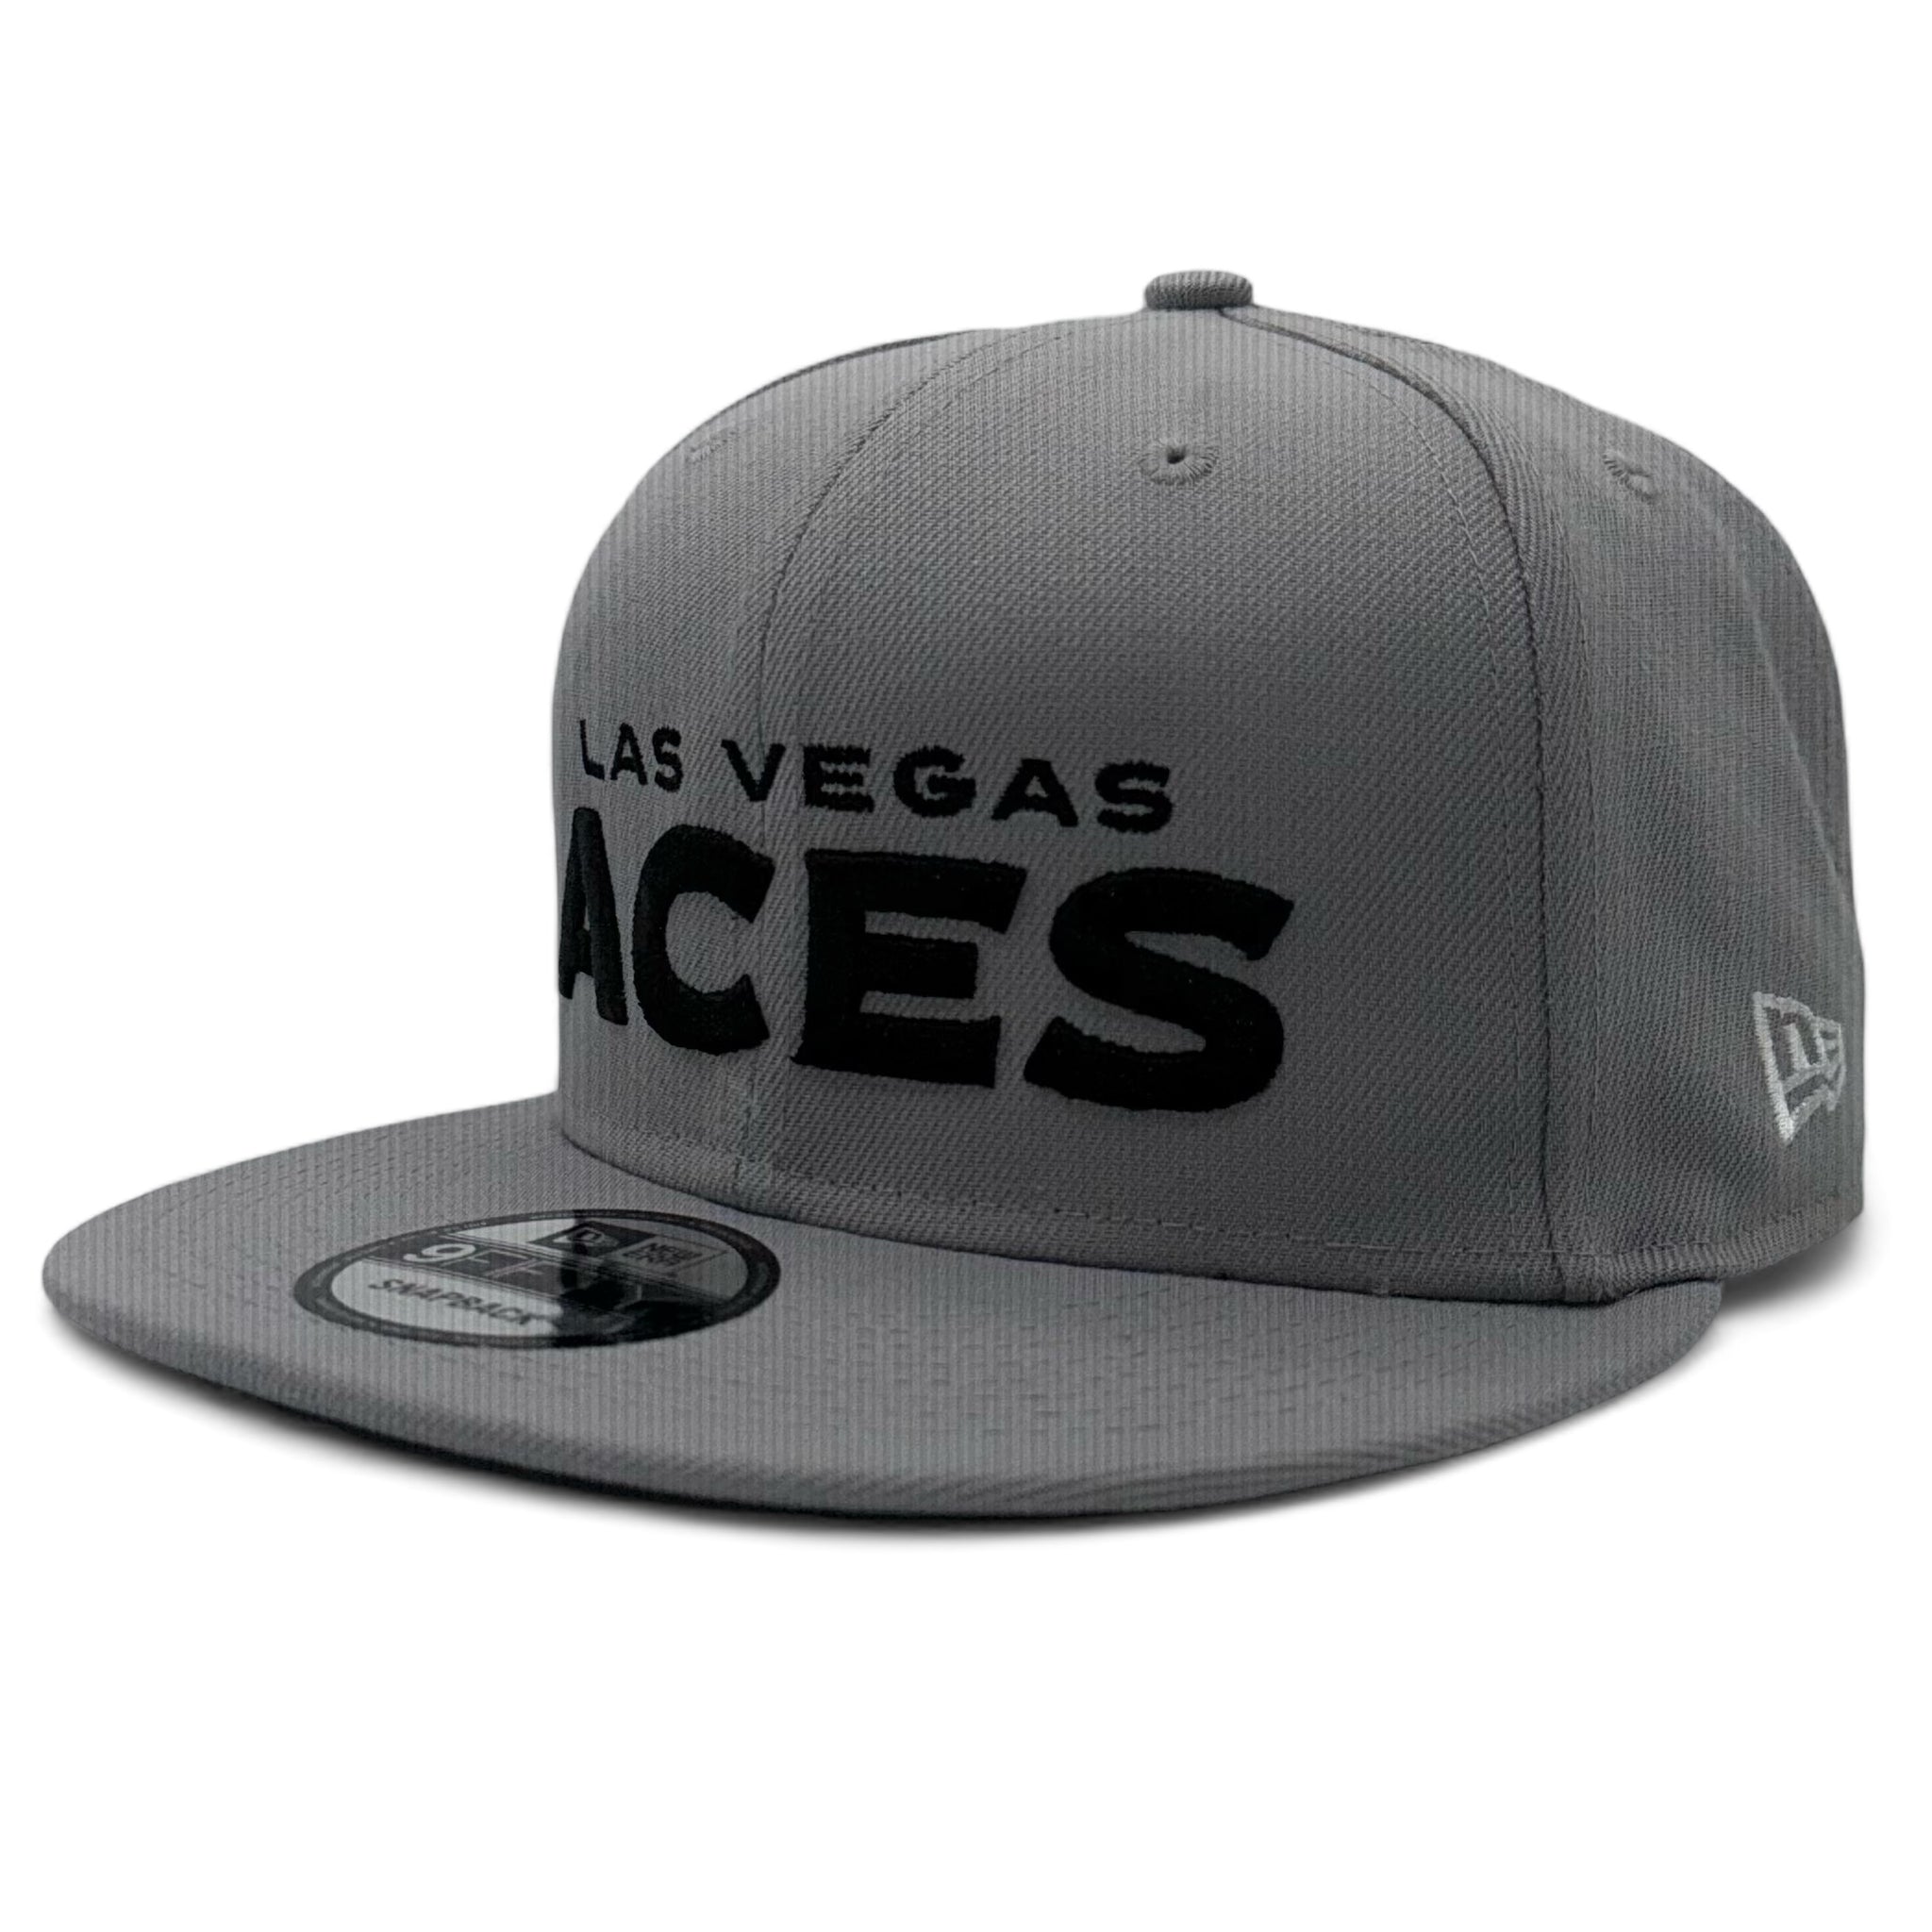 Las Vegas Aces Wordmark 9fifty Snapback Hat - Grey